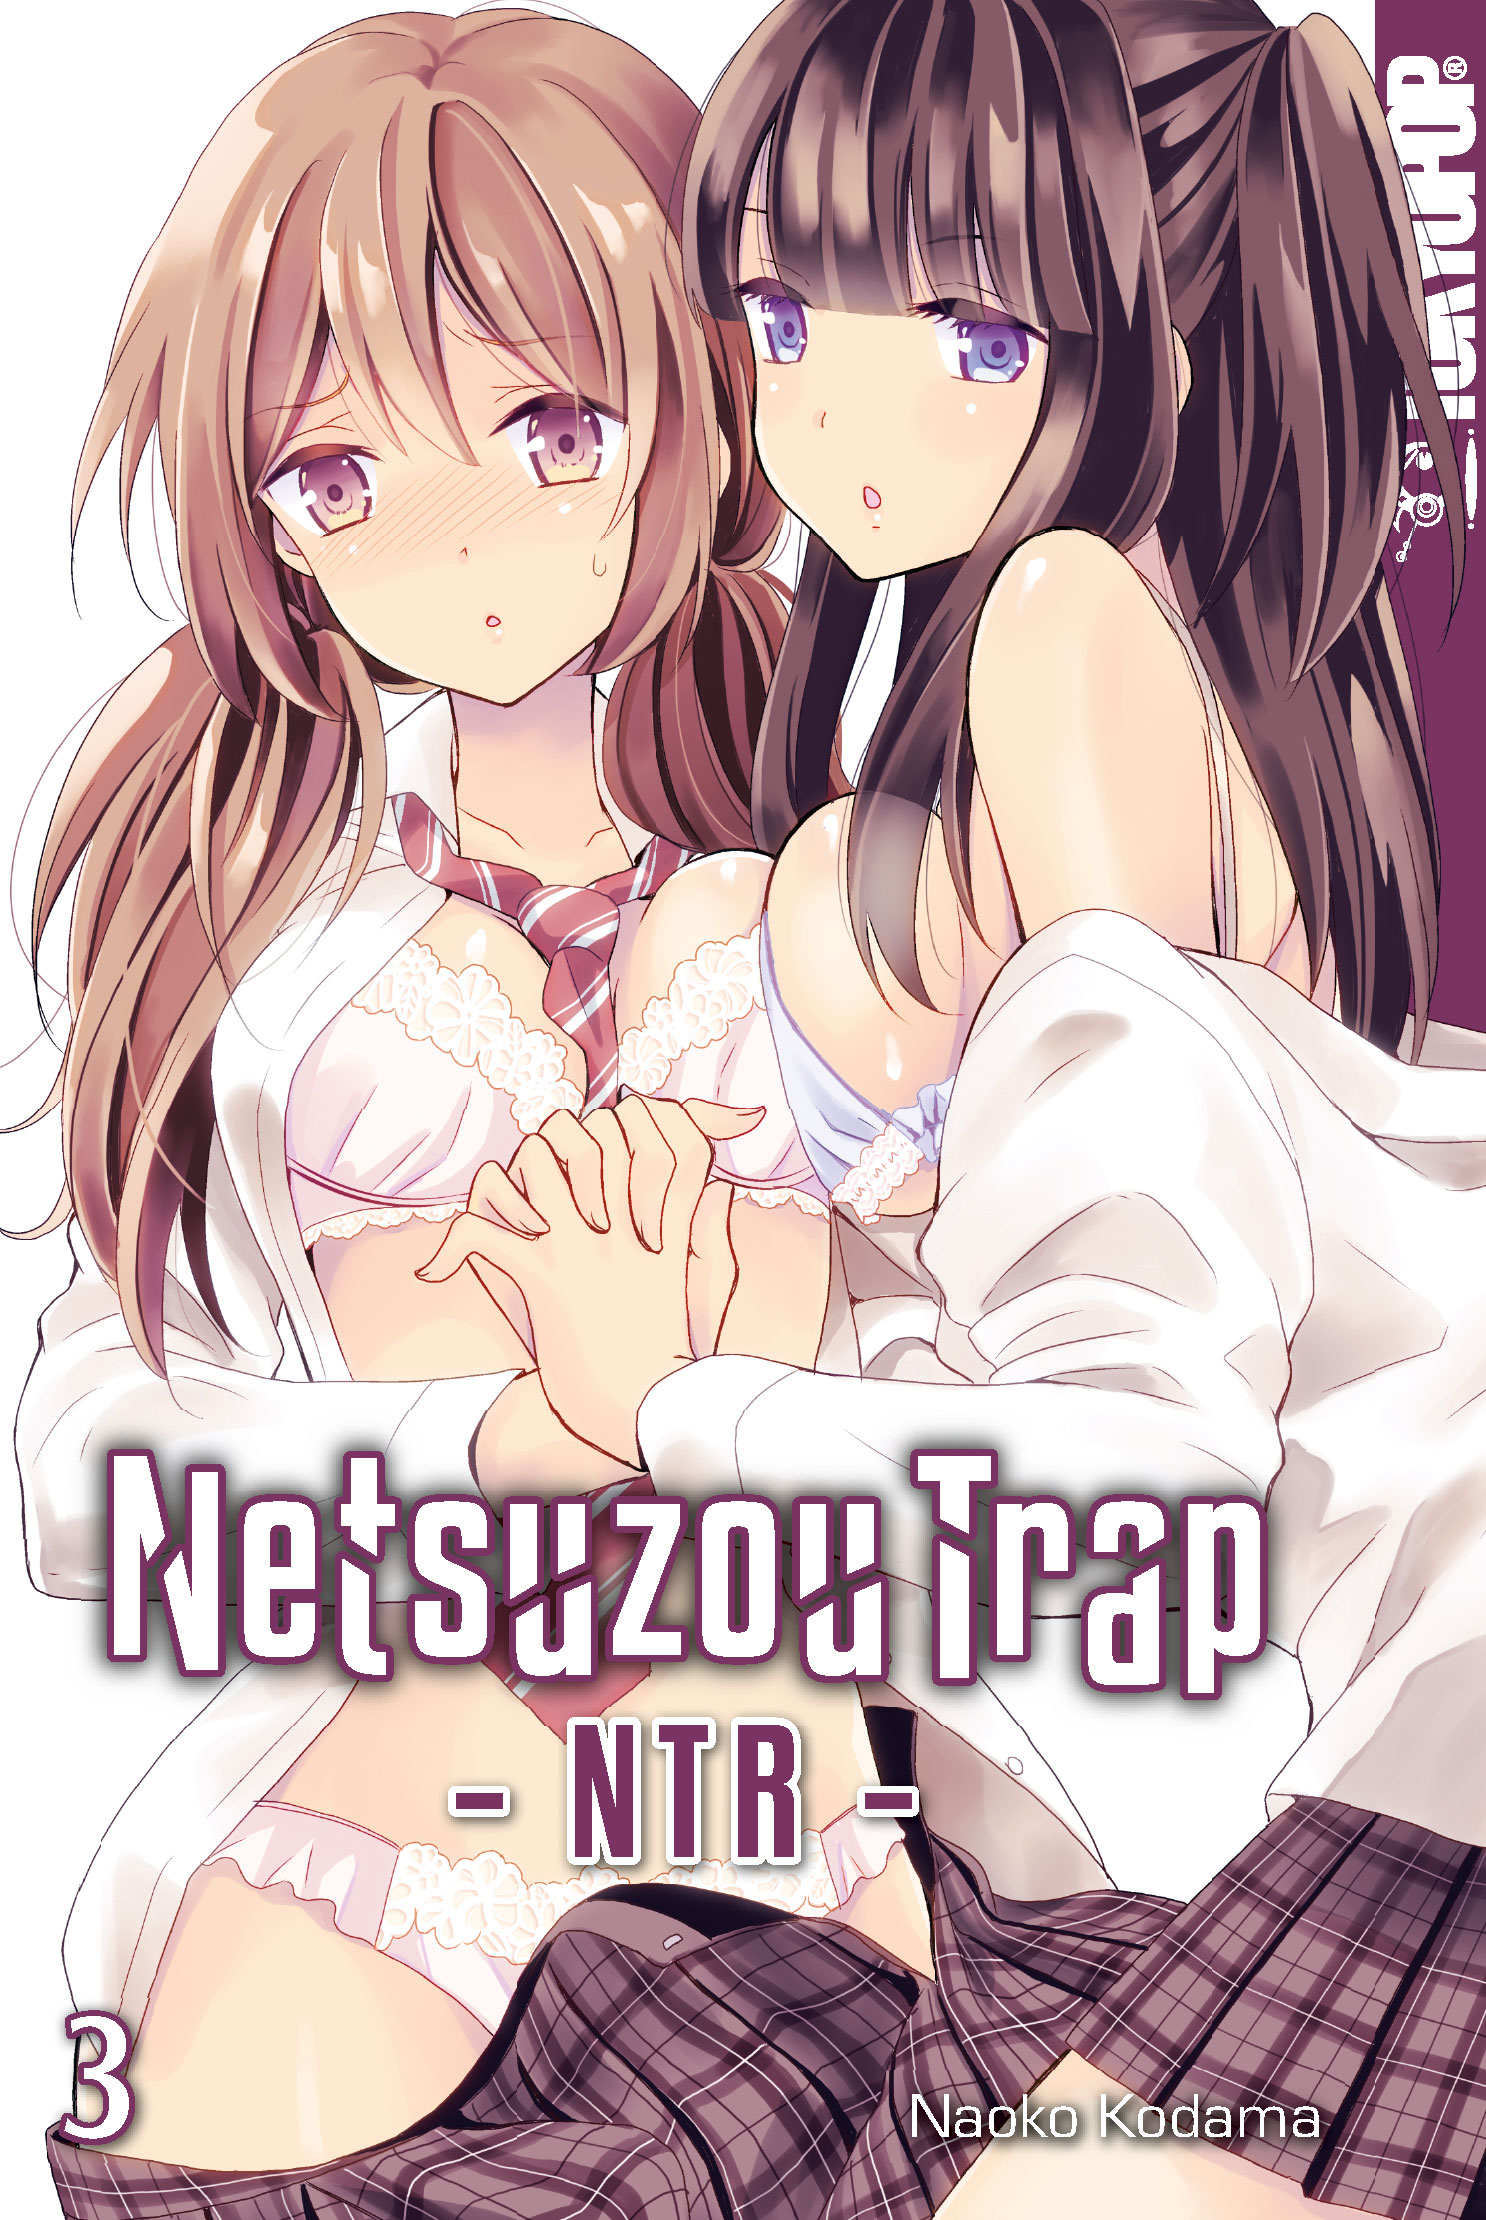 Netsuzou Trap -NTR- #3